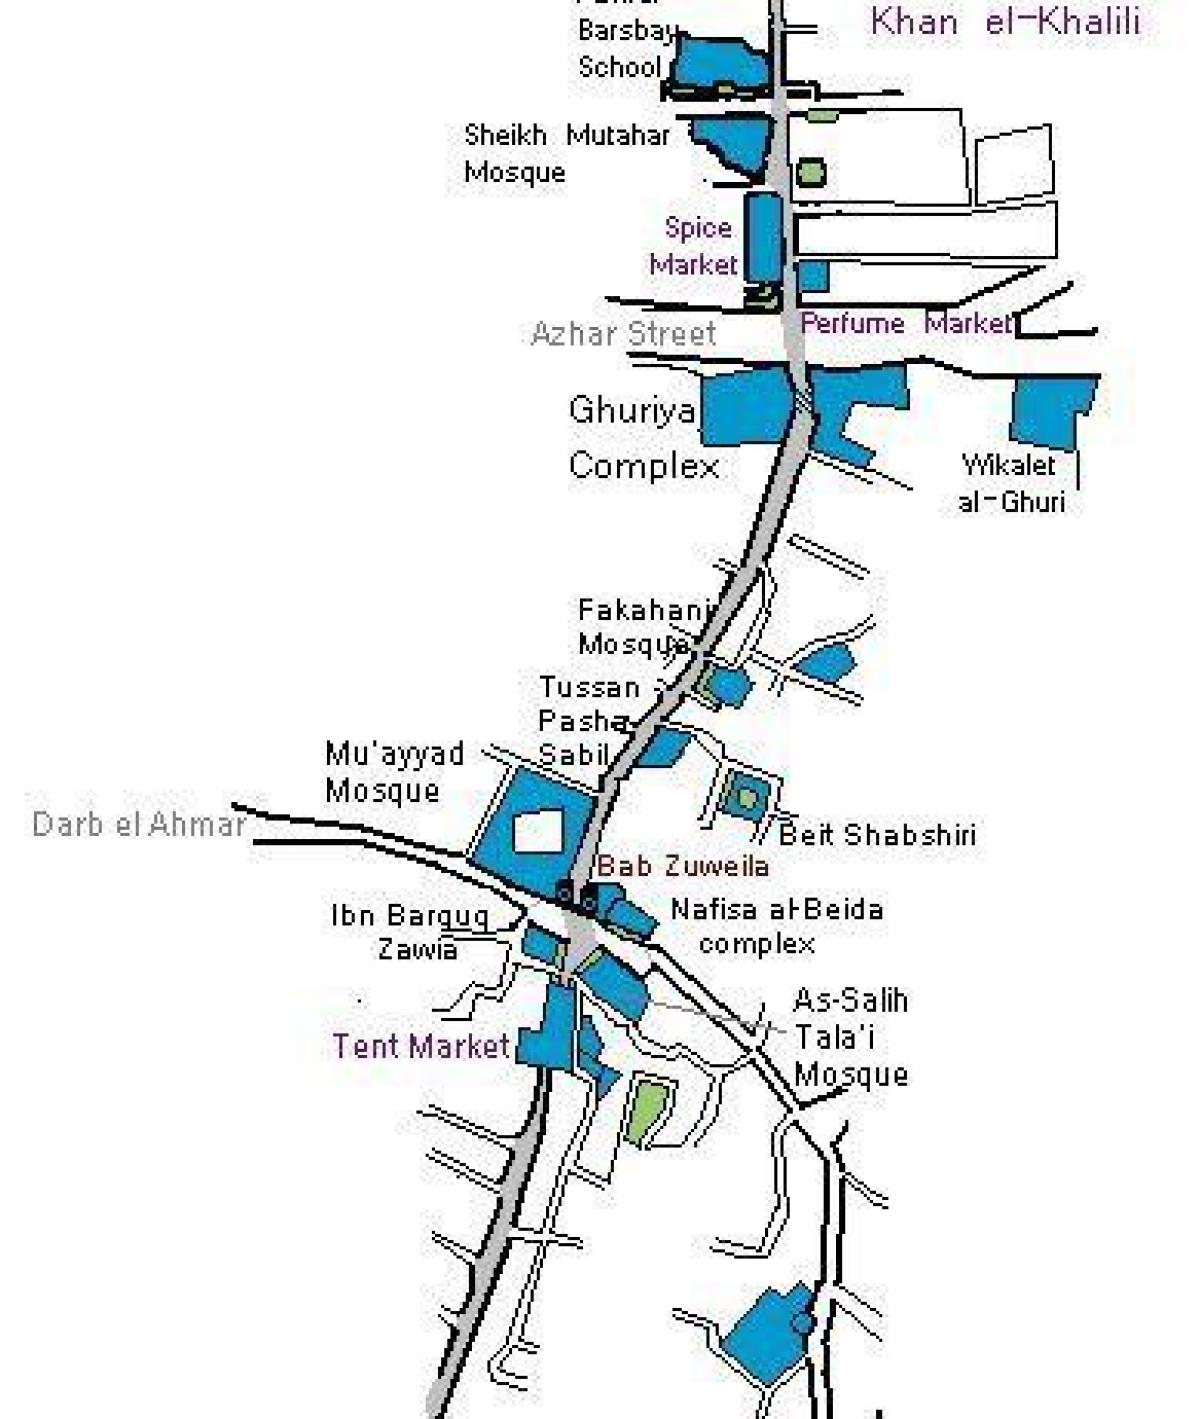 خان ال khalili بازار کا نقشہ